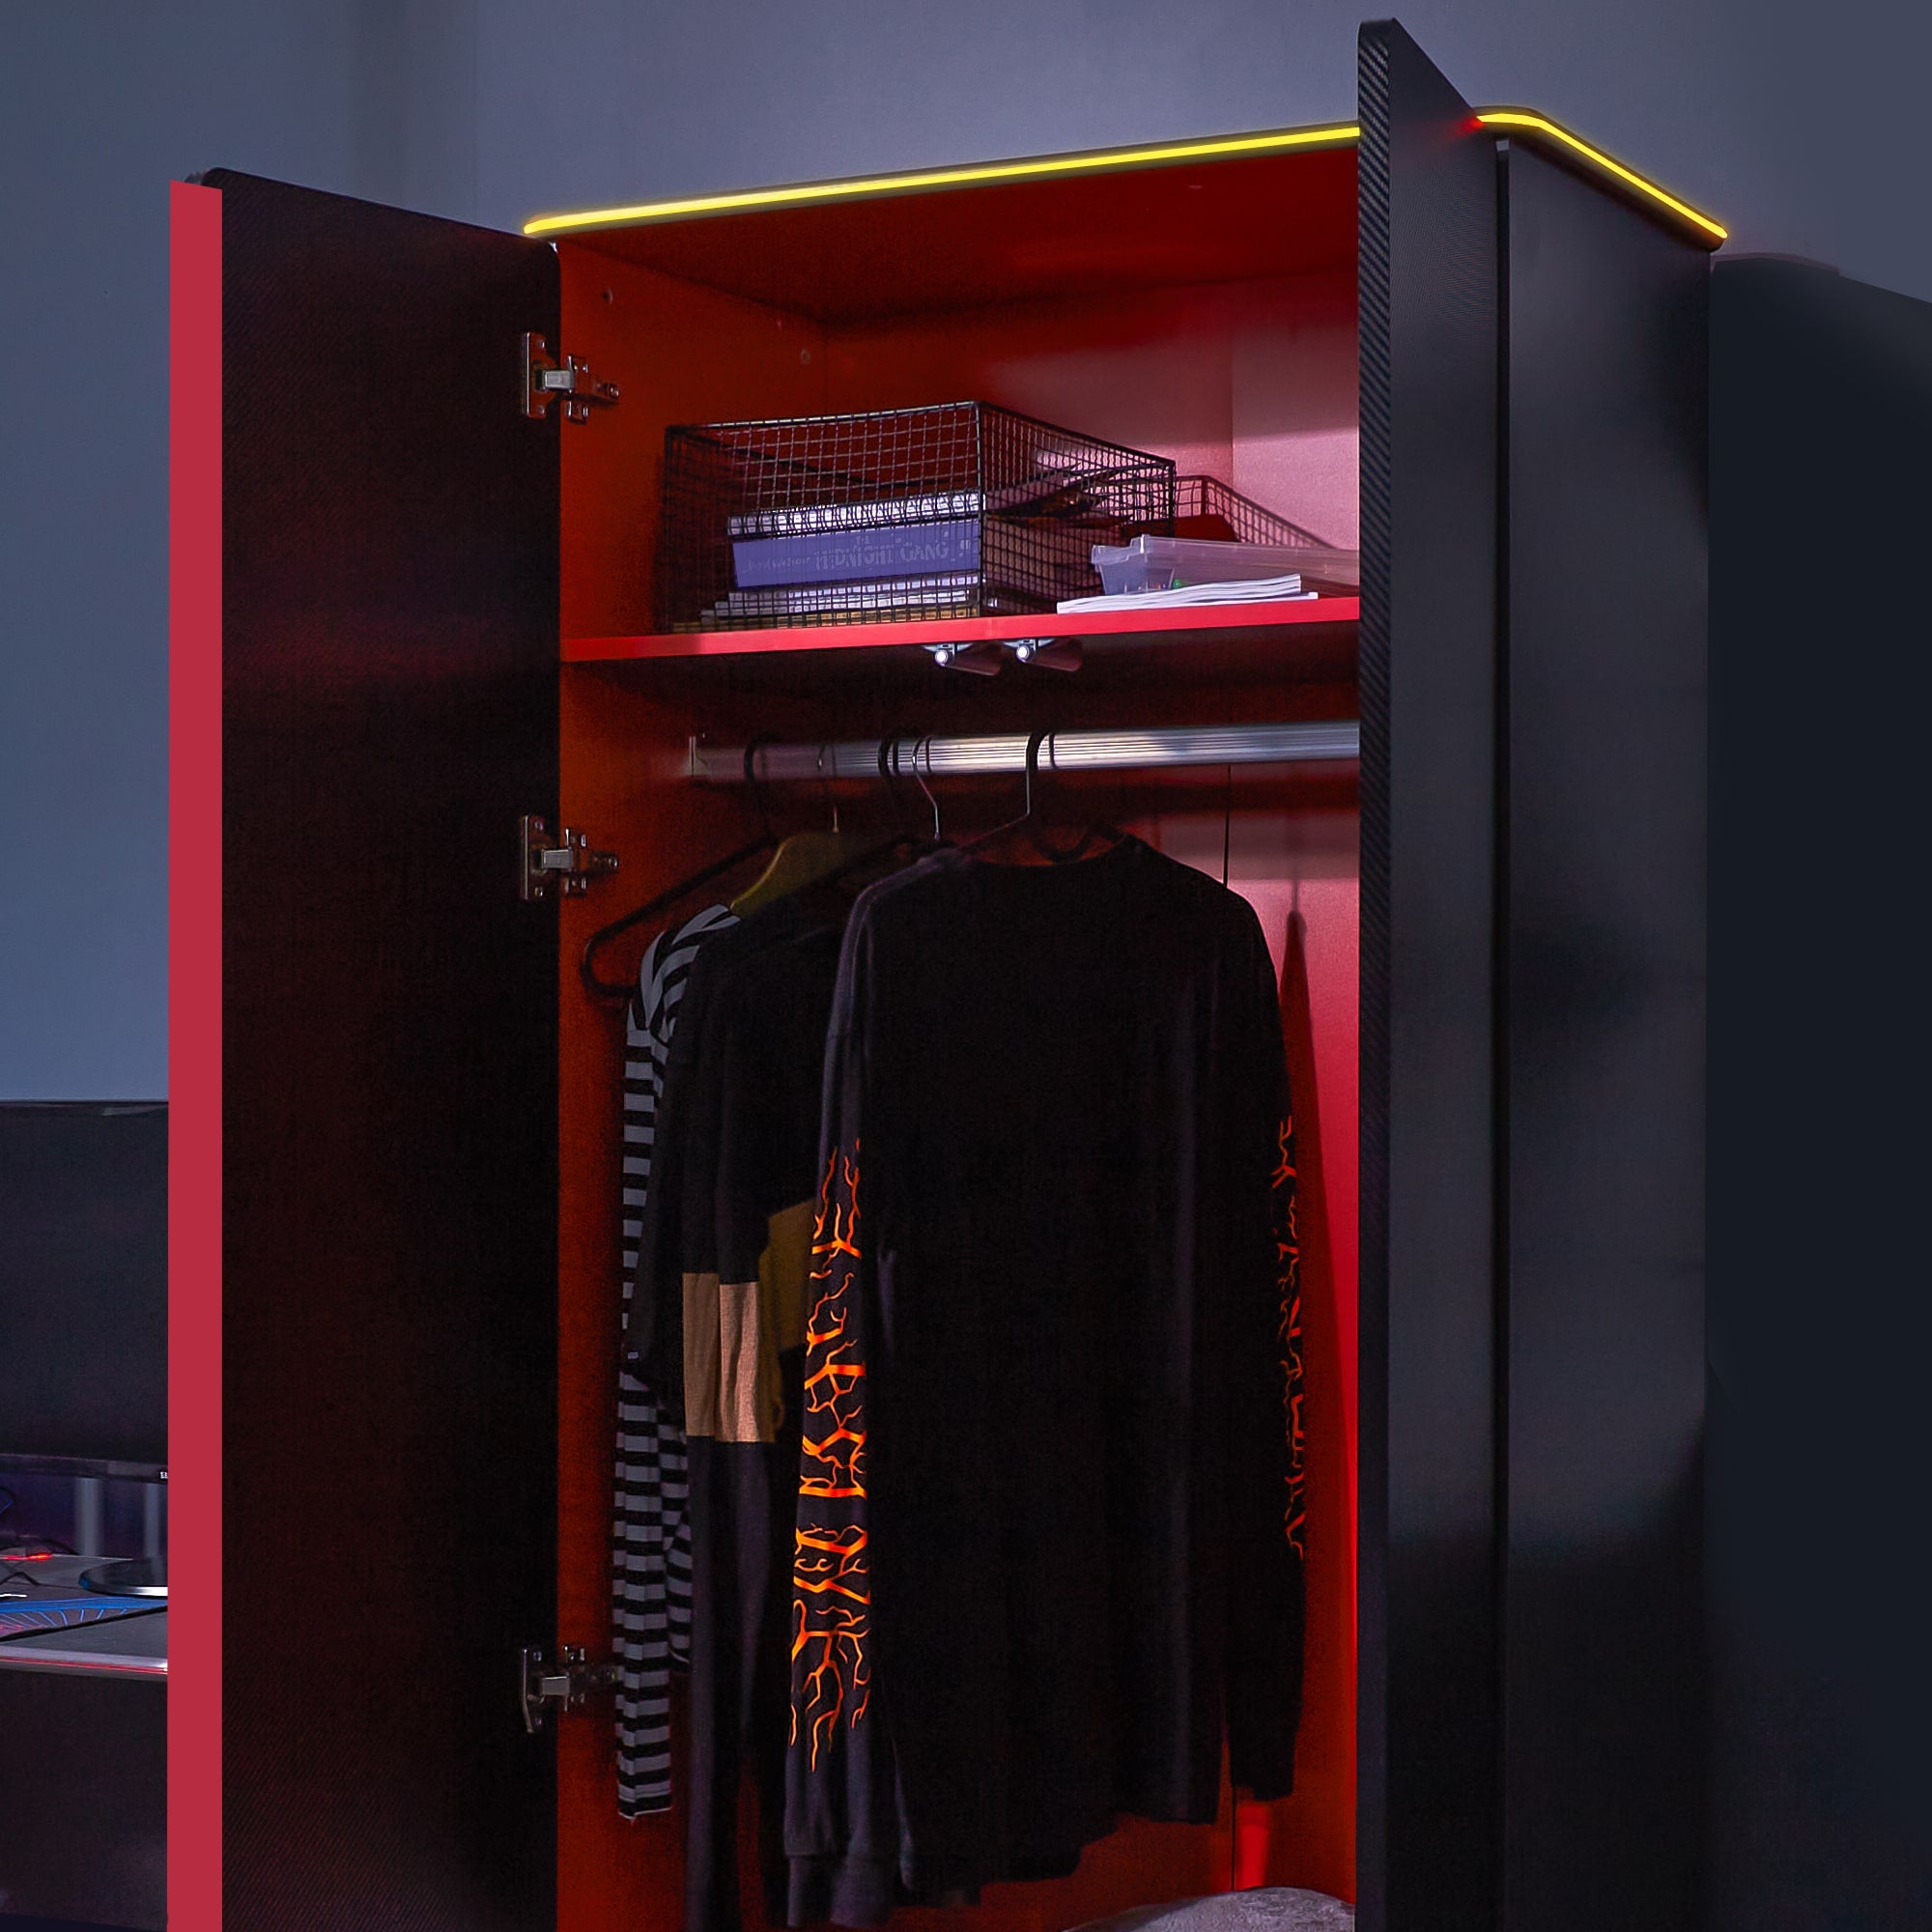 X Rocker Carbon-Tek 2 Door Wardrobe with Drawer and LED Lights